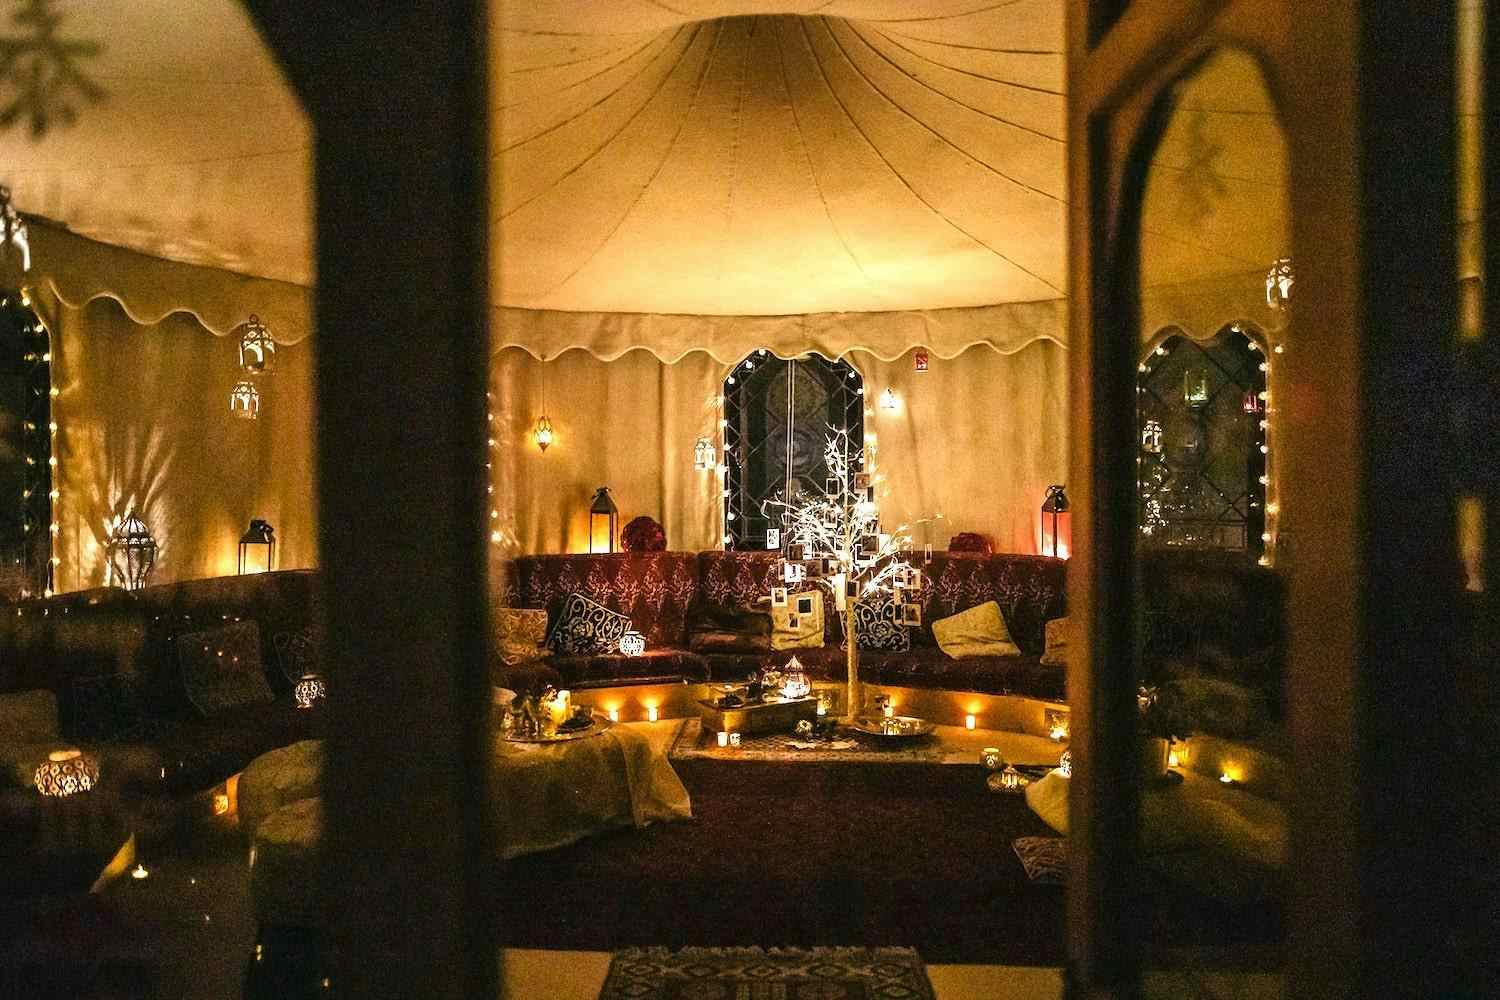 The Bedouin Tent & Garden, St Ethelburga's Centre for Reconciliation & Peace